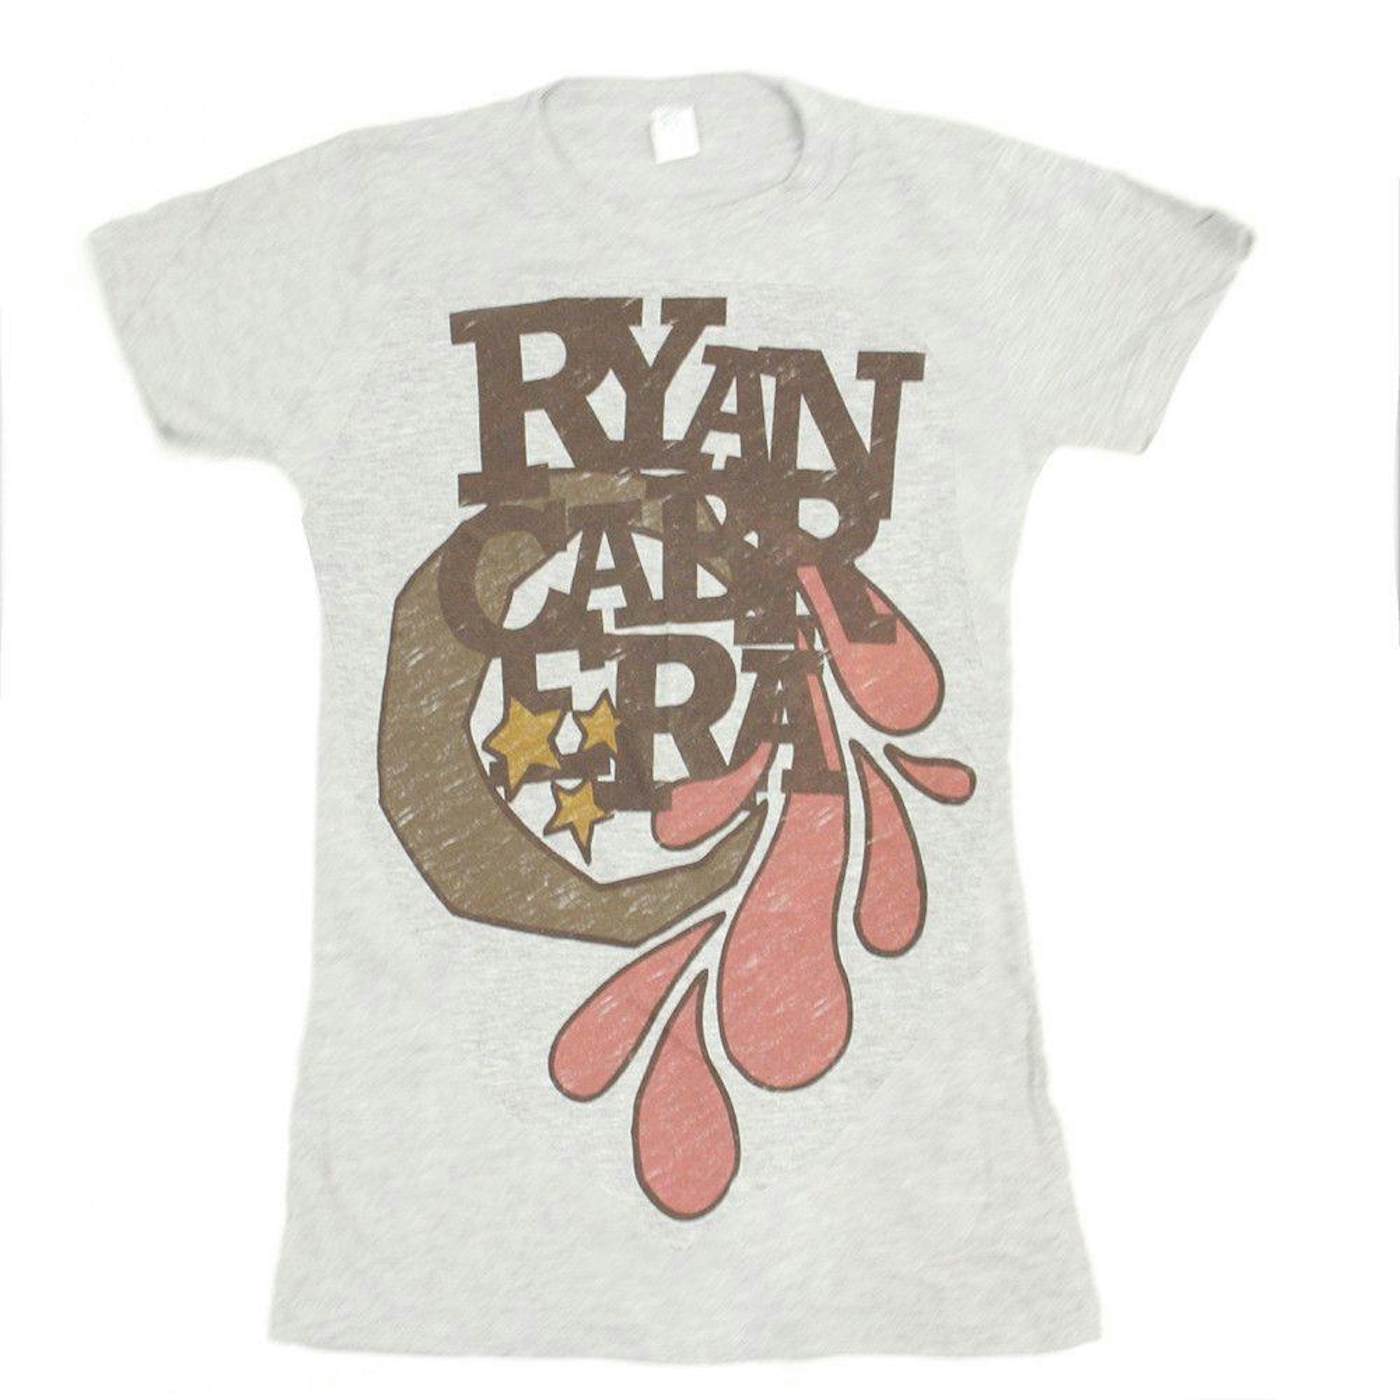 Ryan Cabrera Moon Doodle T-shirt - Women's